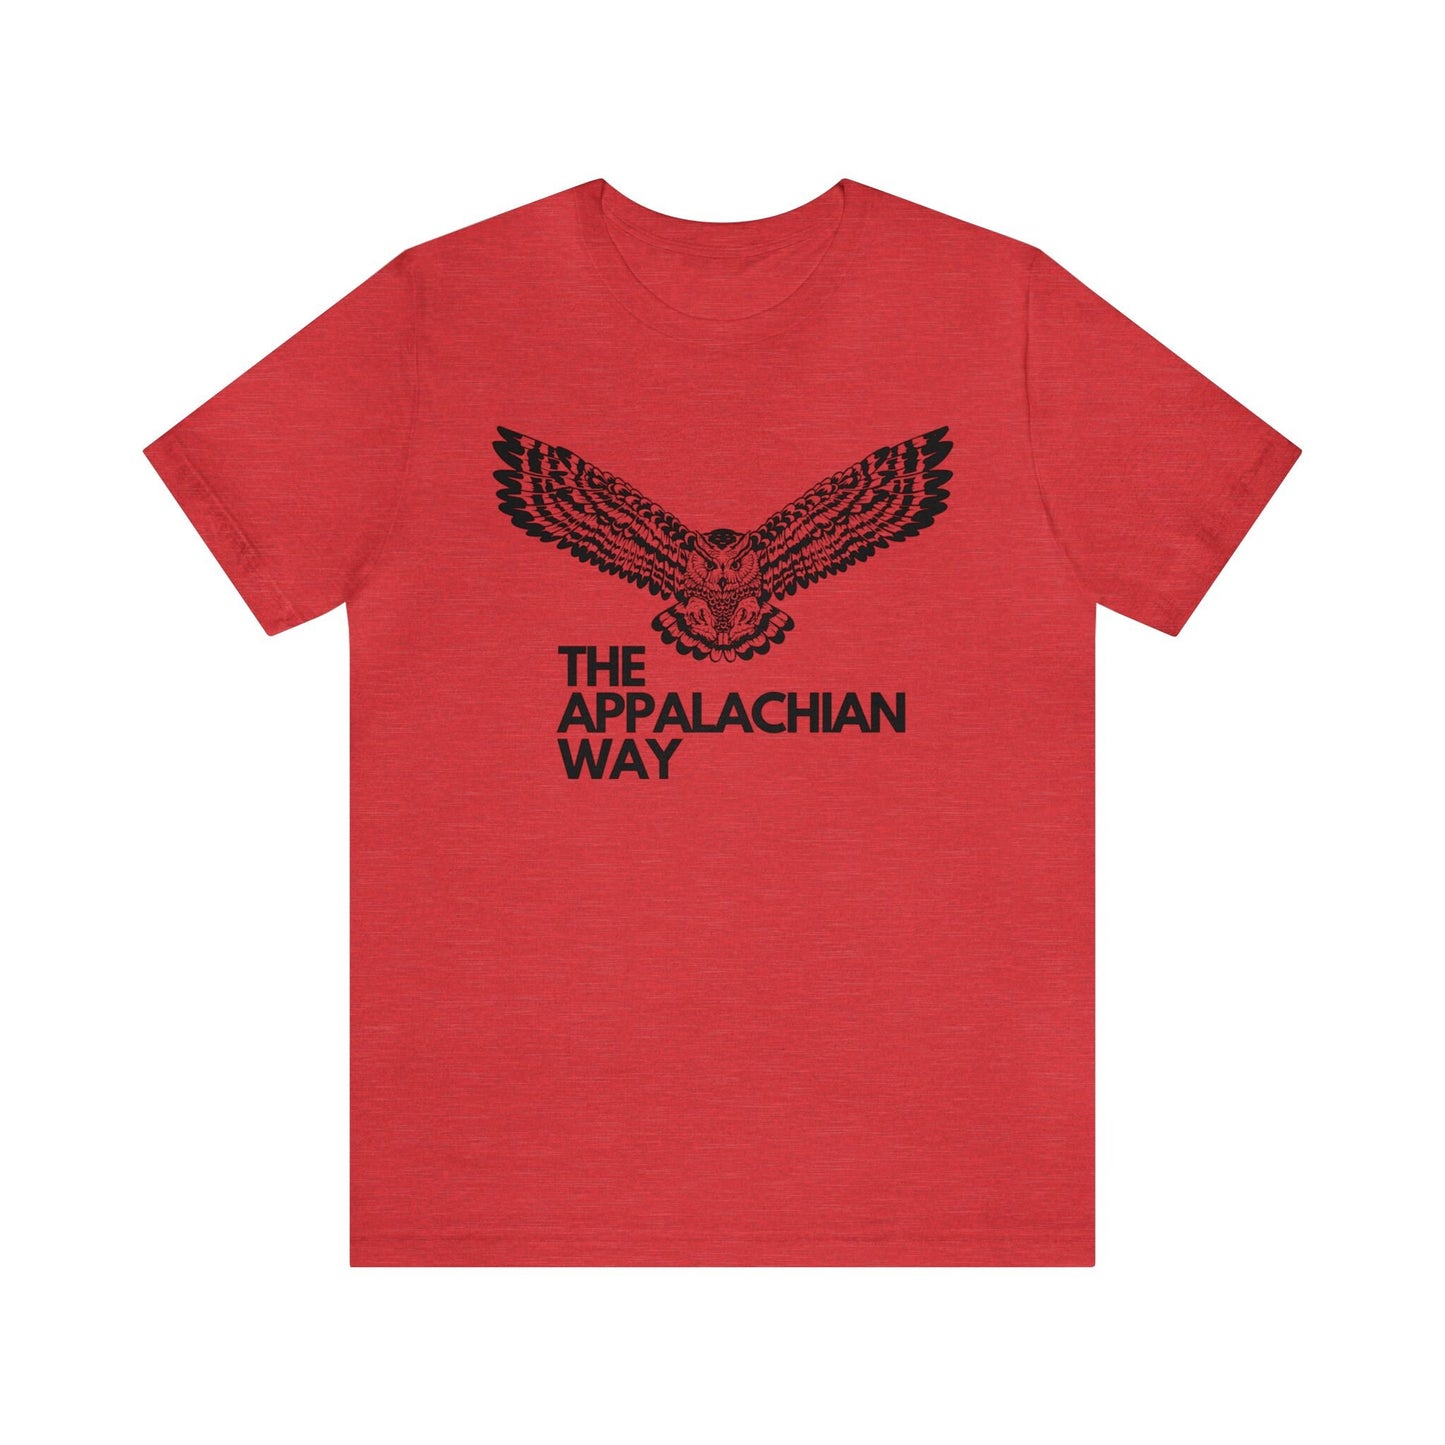 The Appalachian Way Graphic Owl T-shirt